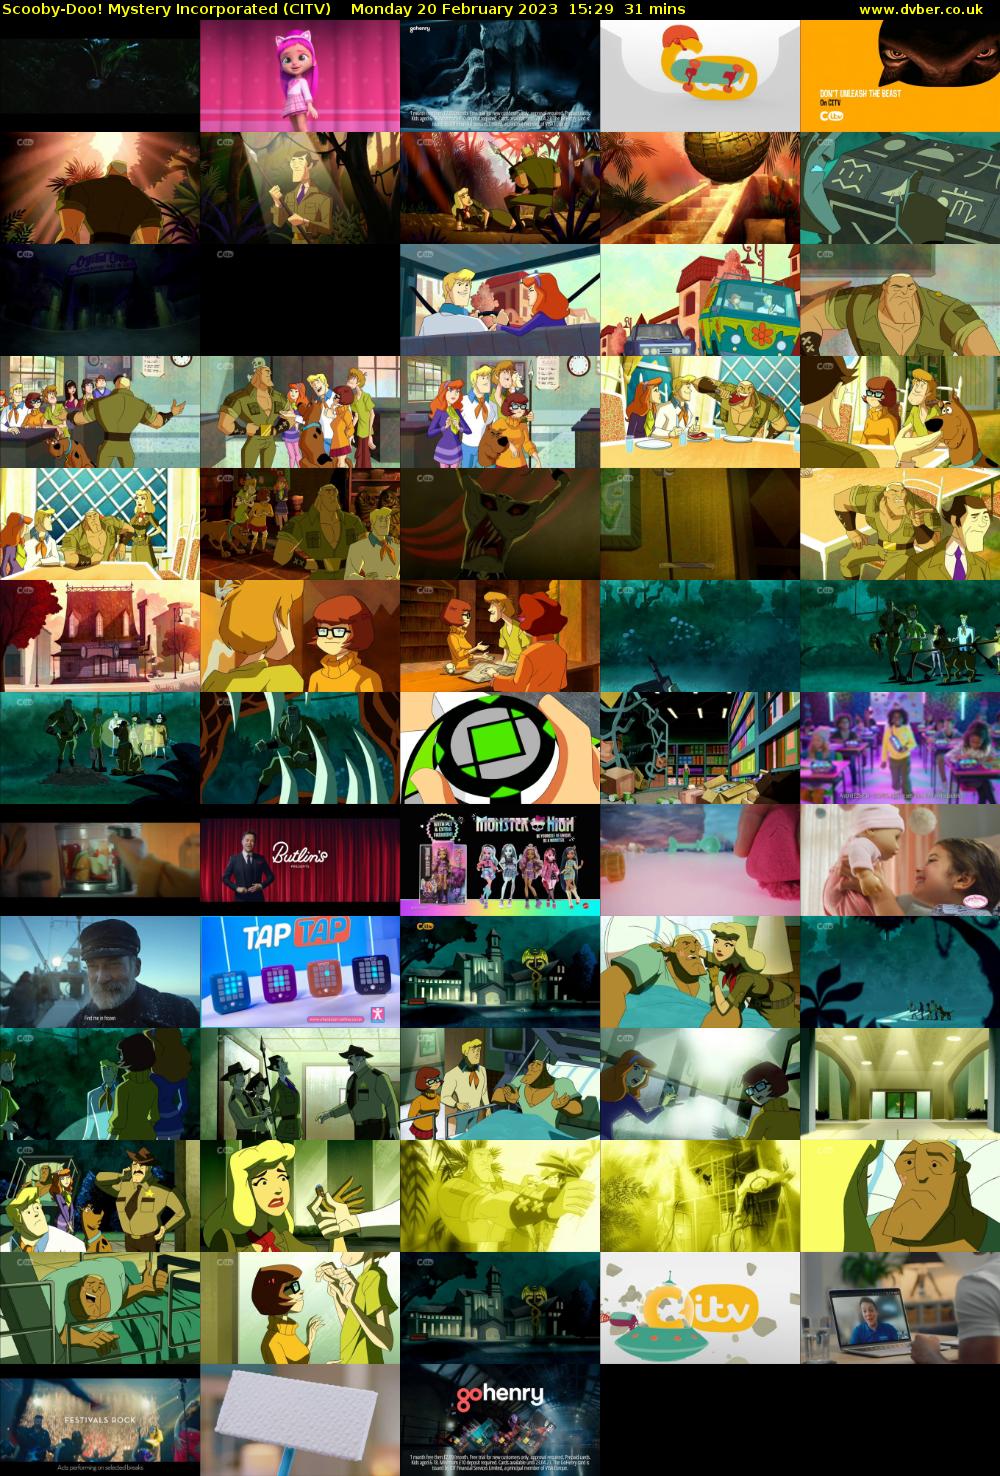 Scooby-Doo! Mystery Incorporated (CITV) Monday 20 February 2023 15:29 - 16:00